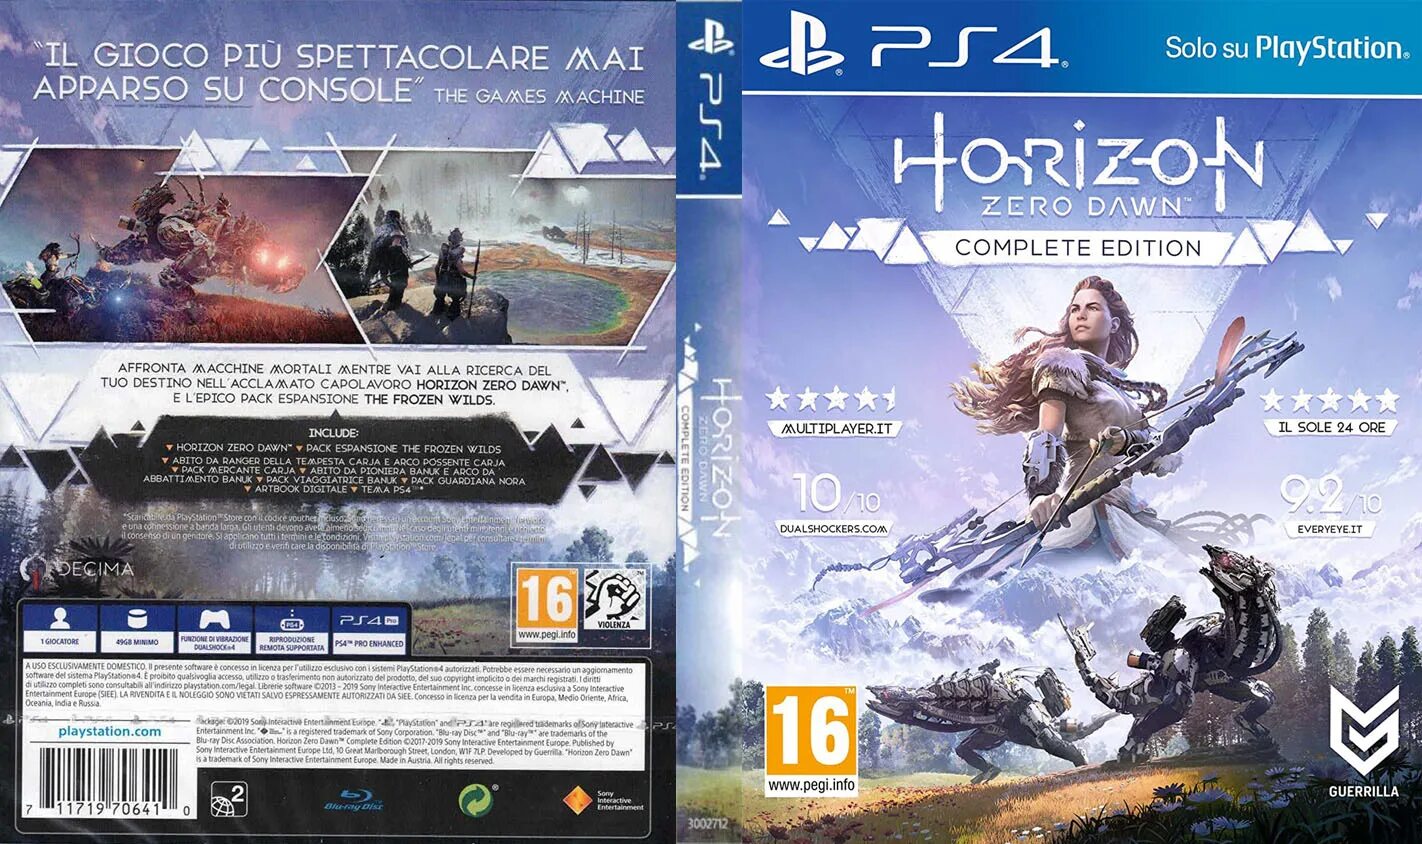 Horizon Zero Dawn ps4 диск. Horizon Zero down ps4 диск. Хорайзон 2 диск. Horizon Zero Dawn диск пс4. Complete edition game